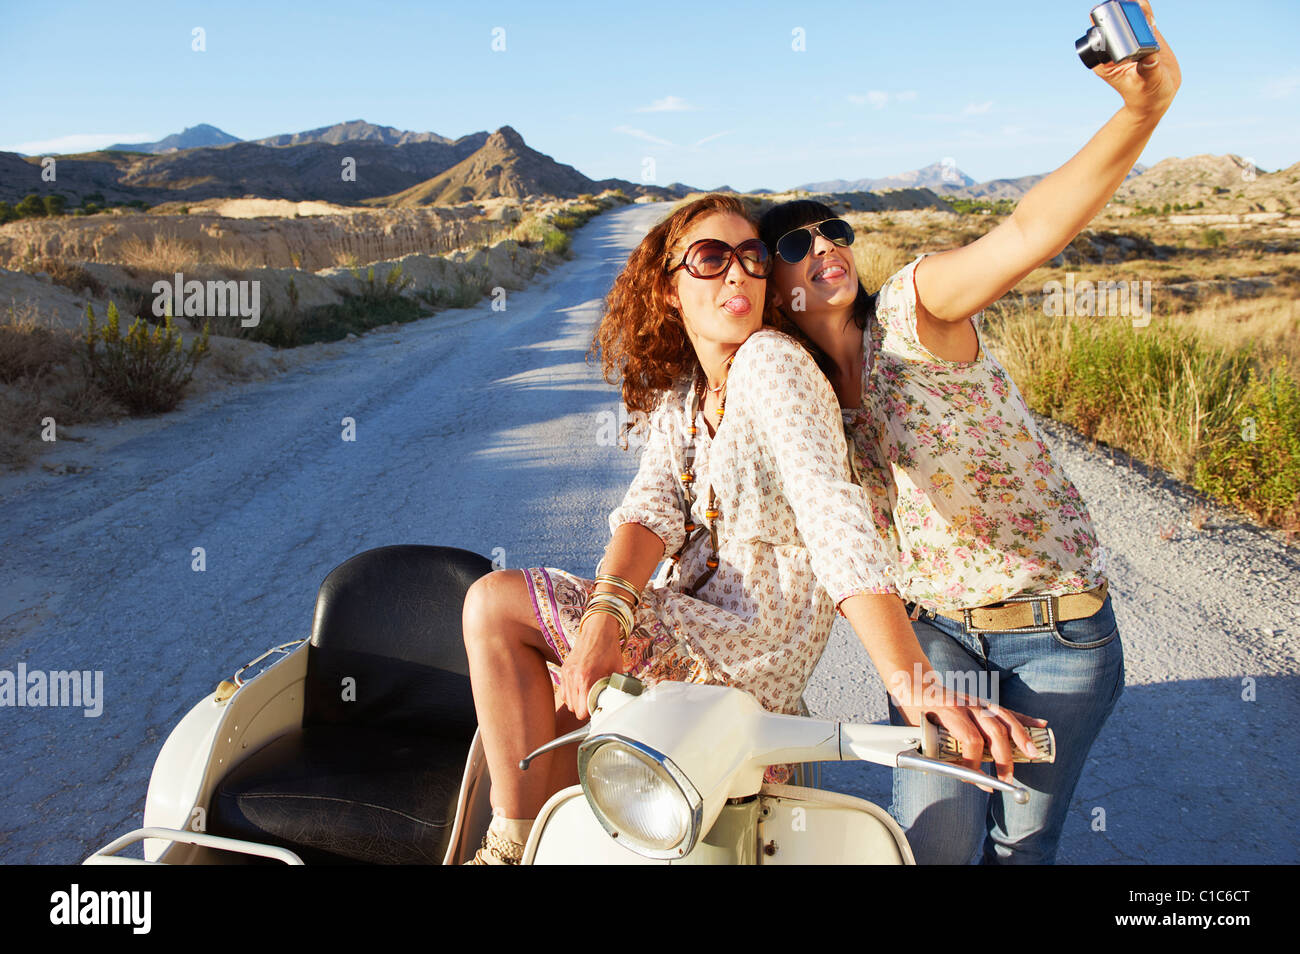 Frauen auf dem Motorrad fotografieren Stockfoto